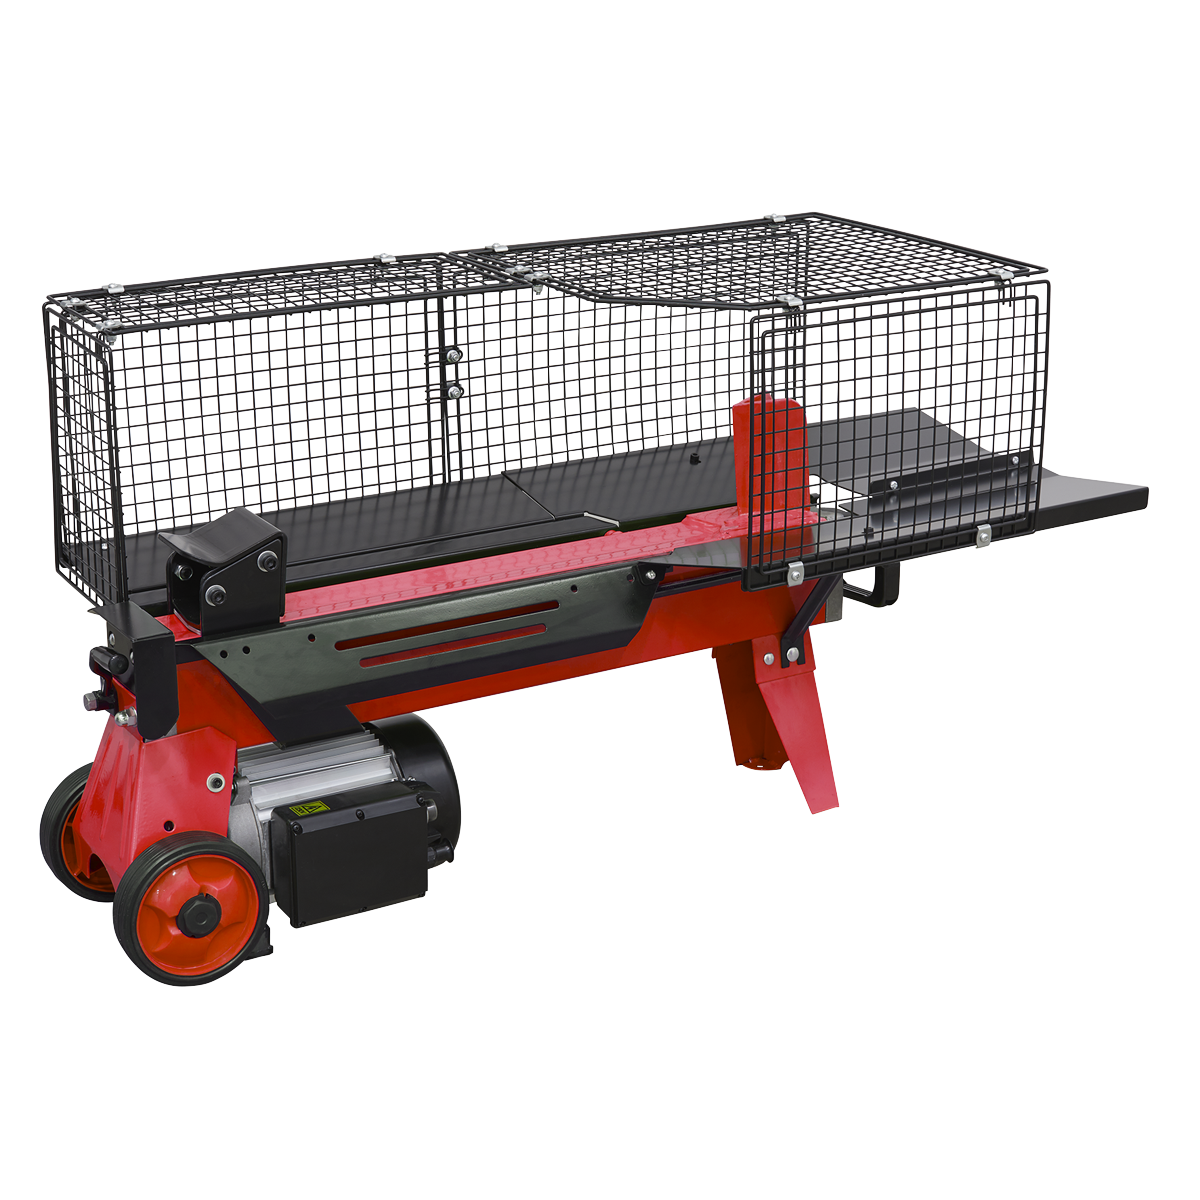 Horizontal Log Splitter 5tonne 520mm Capacity - LS520H - Farming Parts